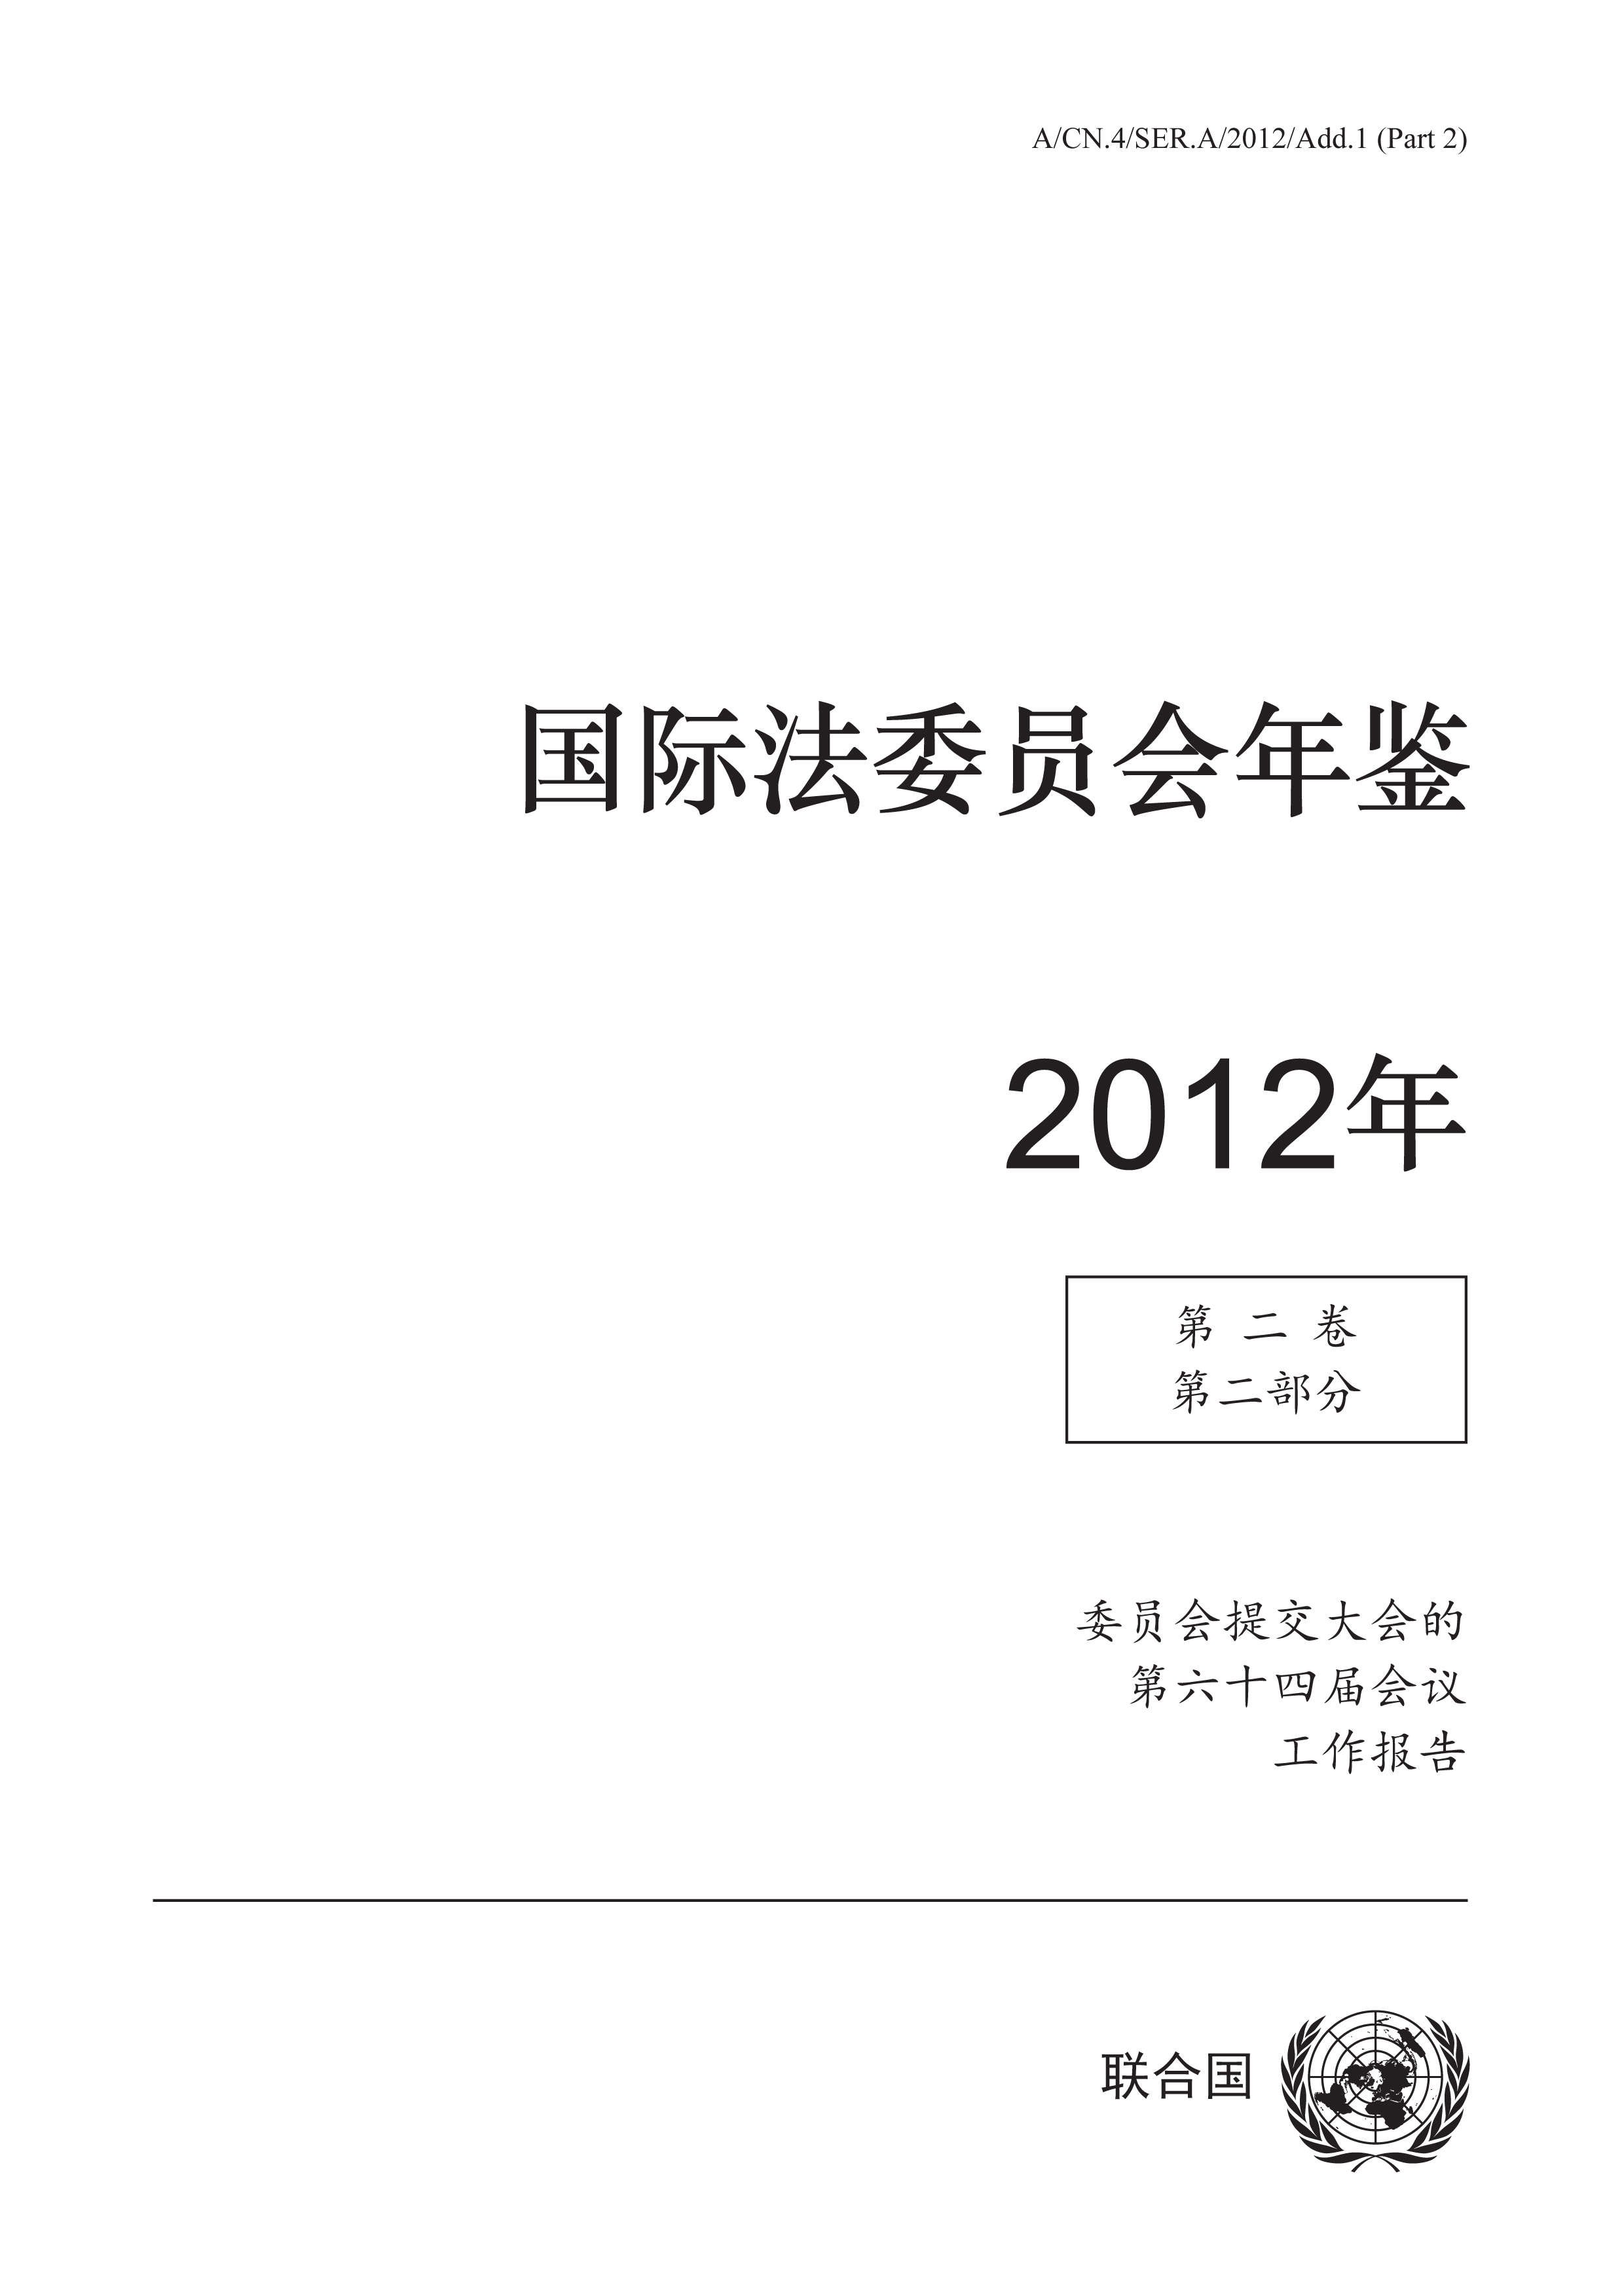 image of 第六十四届会议文件一览表